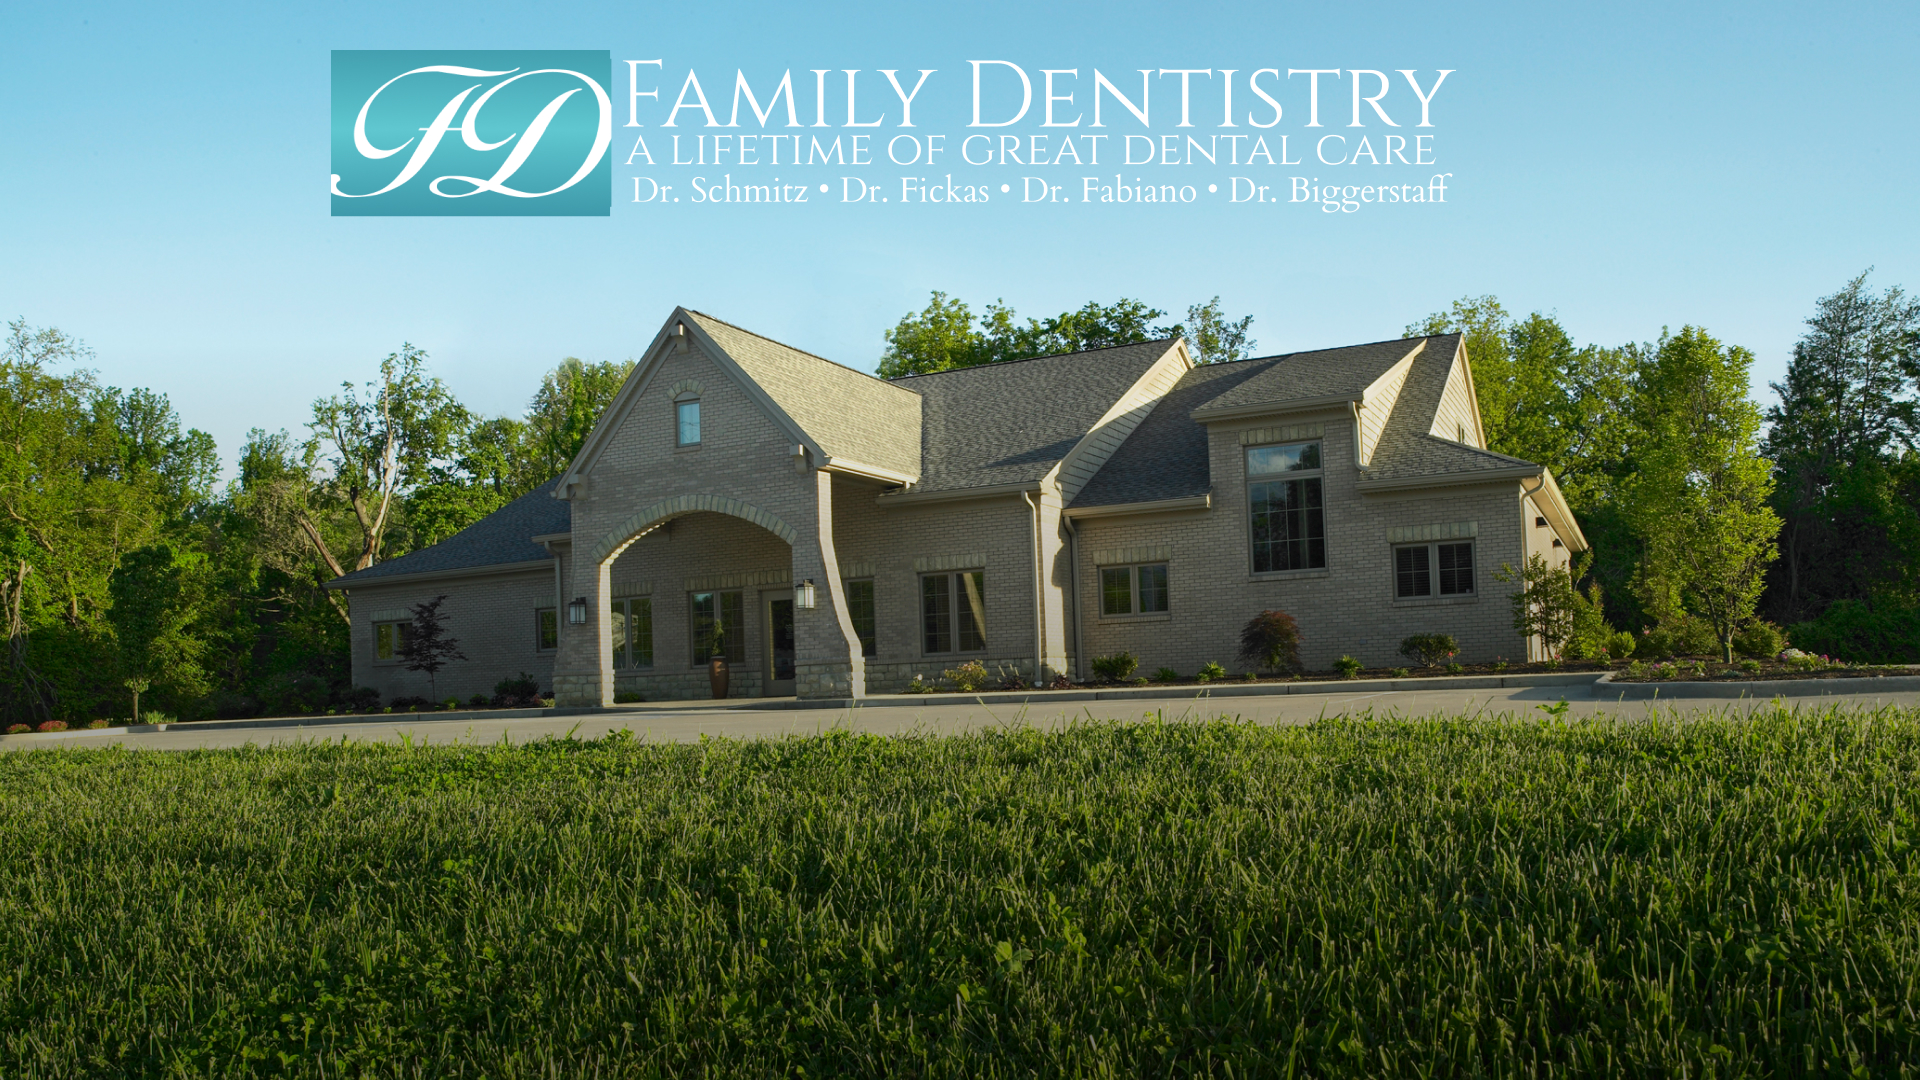 Family Dentistry - Drs. Ogle, Schmitz, Fickas, and Fabiano